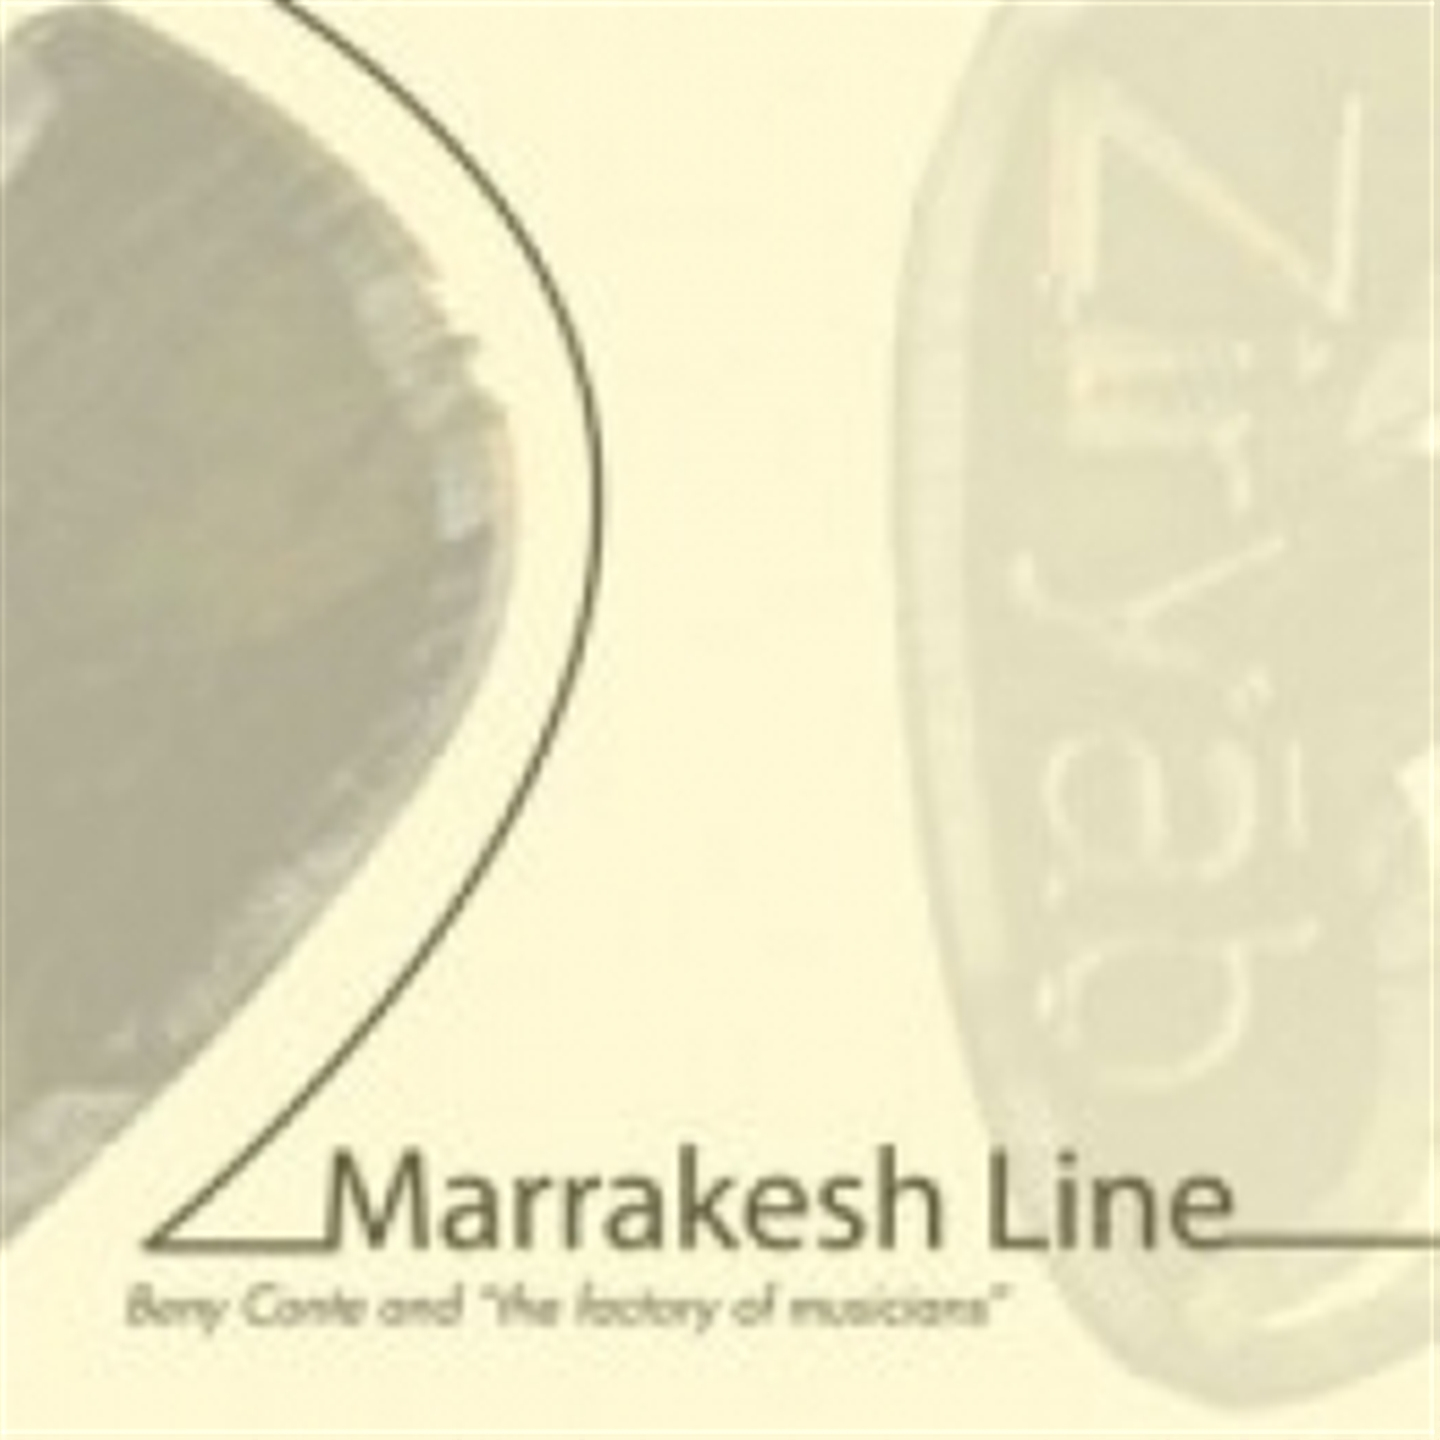 MARRAKESH LINE